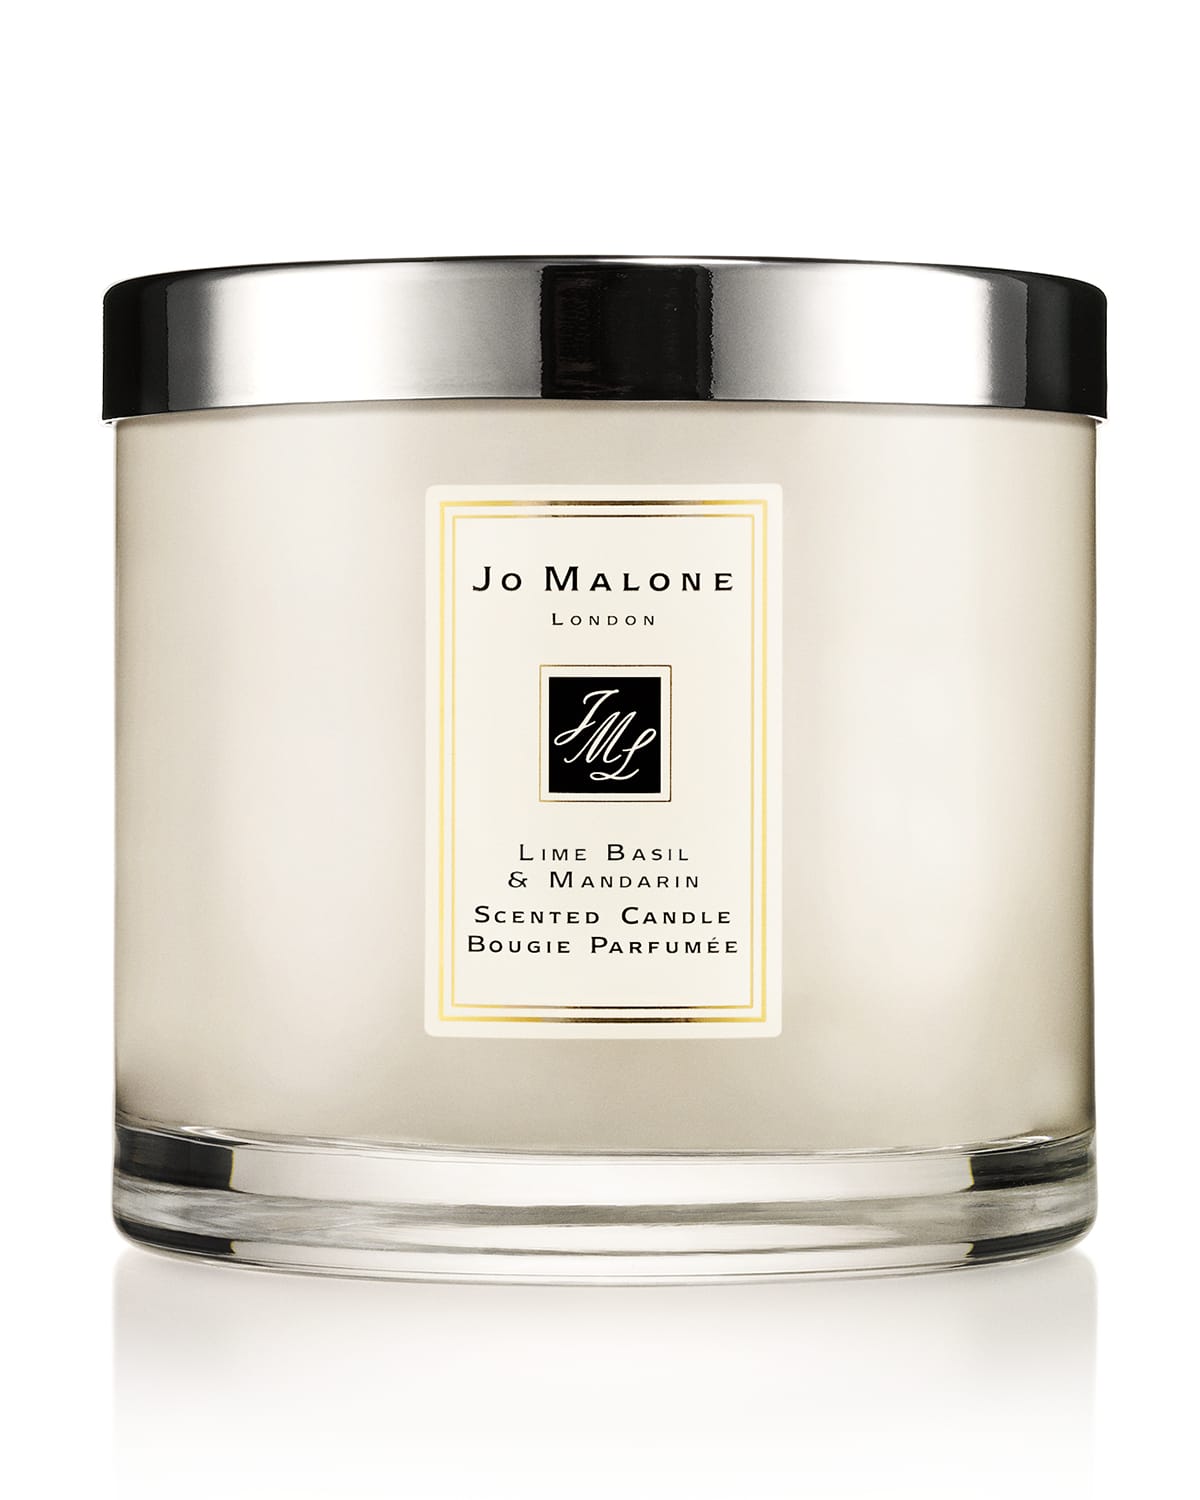 Jo Malone London Lime Basil & Mandarin Travel Candle, 60 g | Neiman Marcus